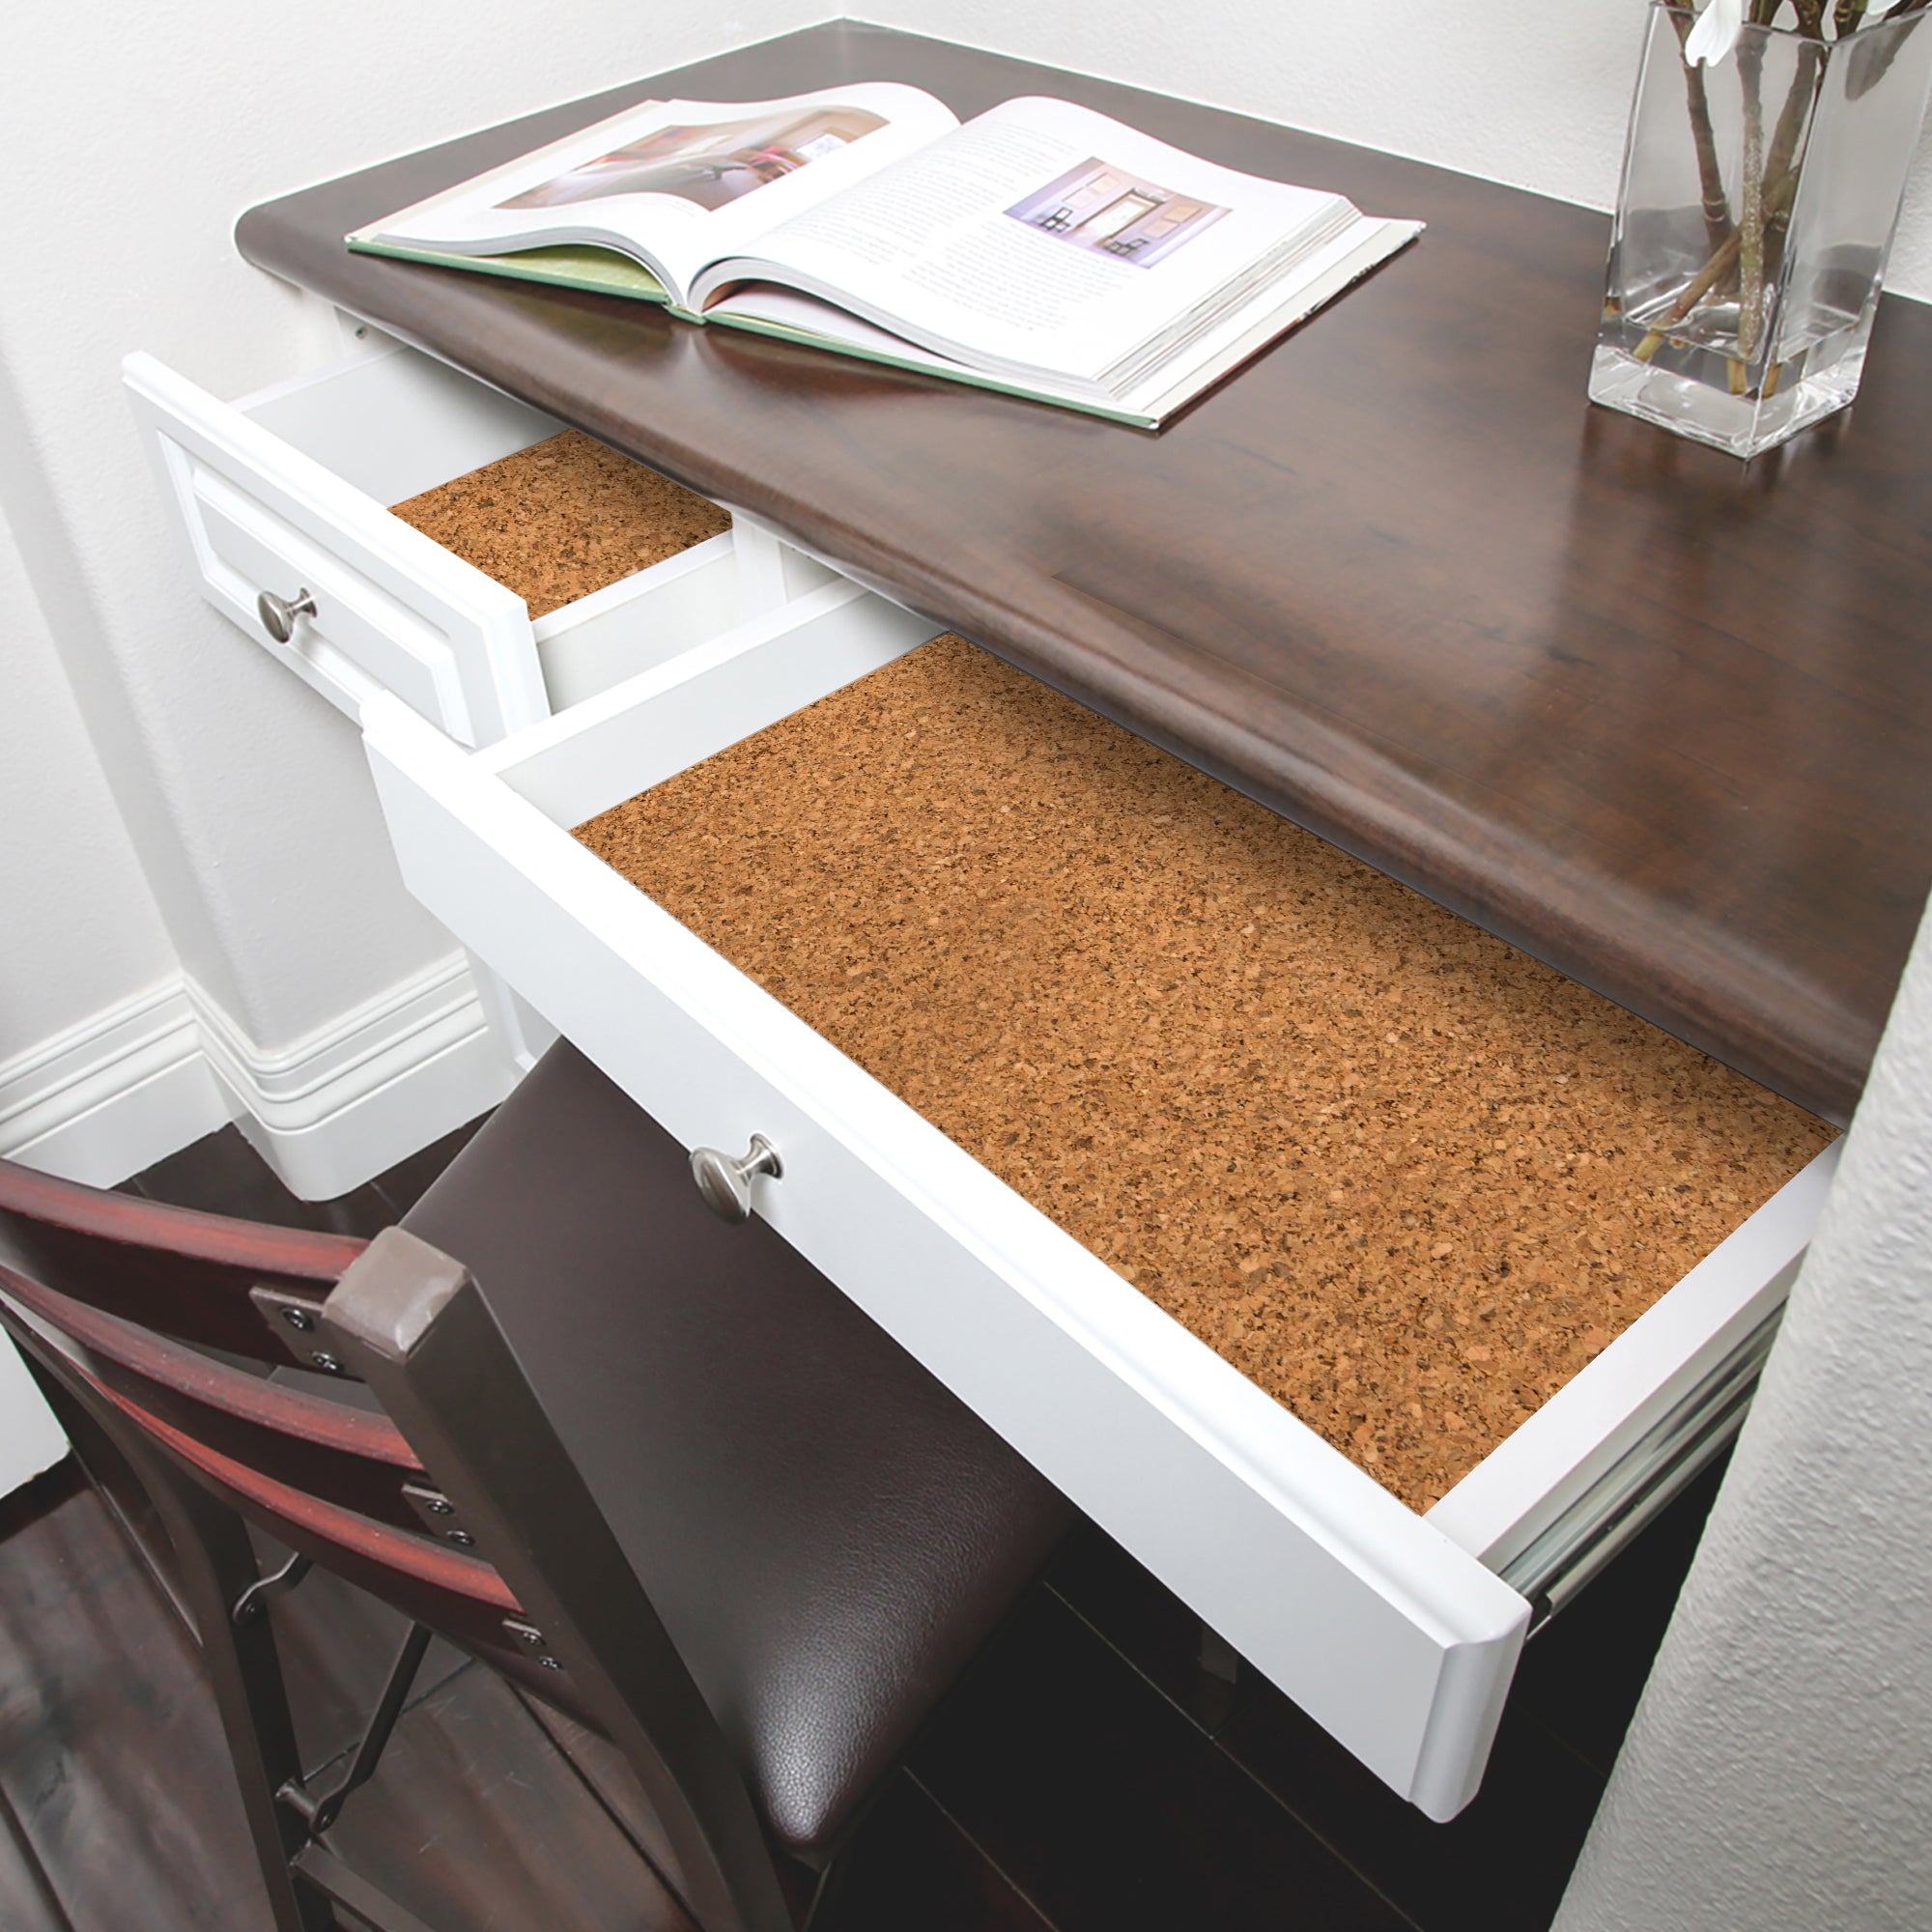 Smart Design | Cork Adhesive Shelf Liner